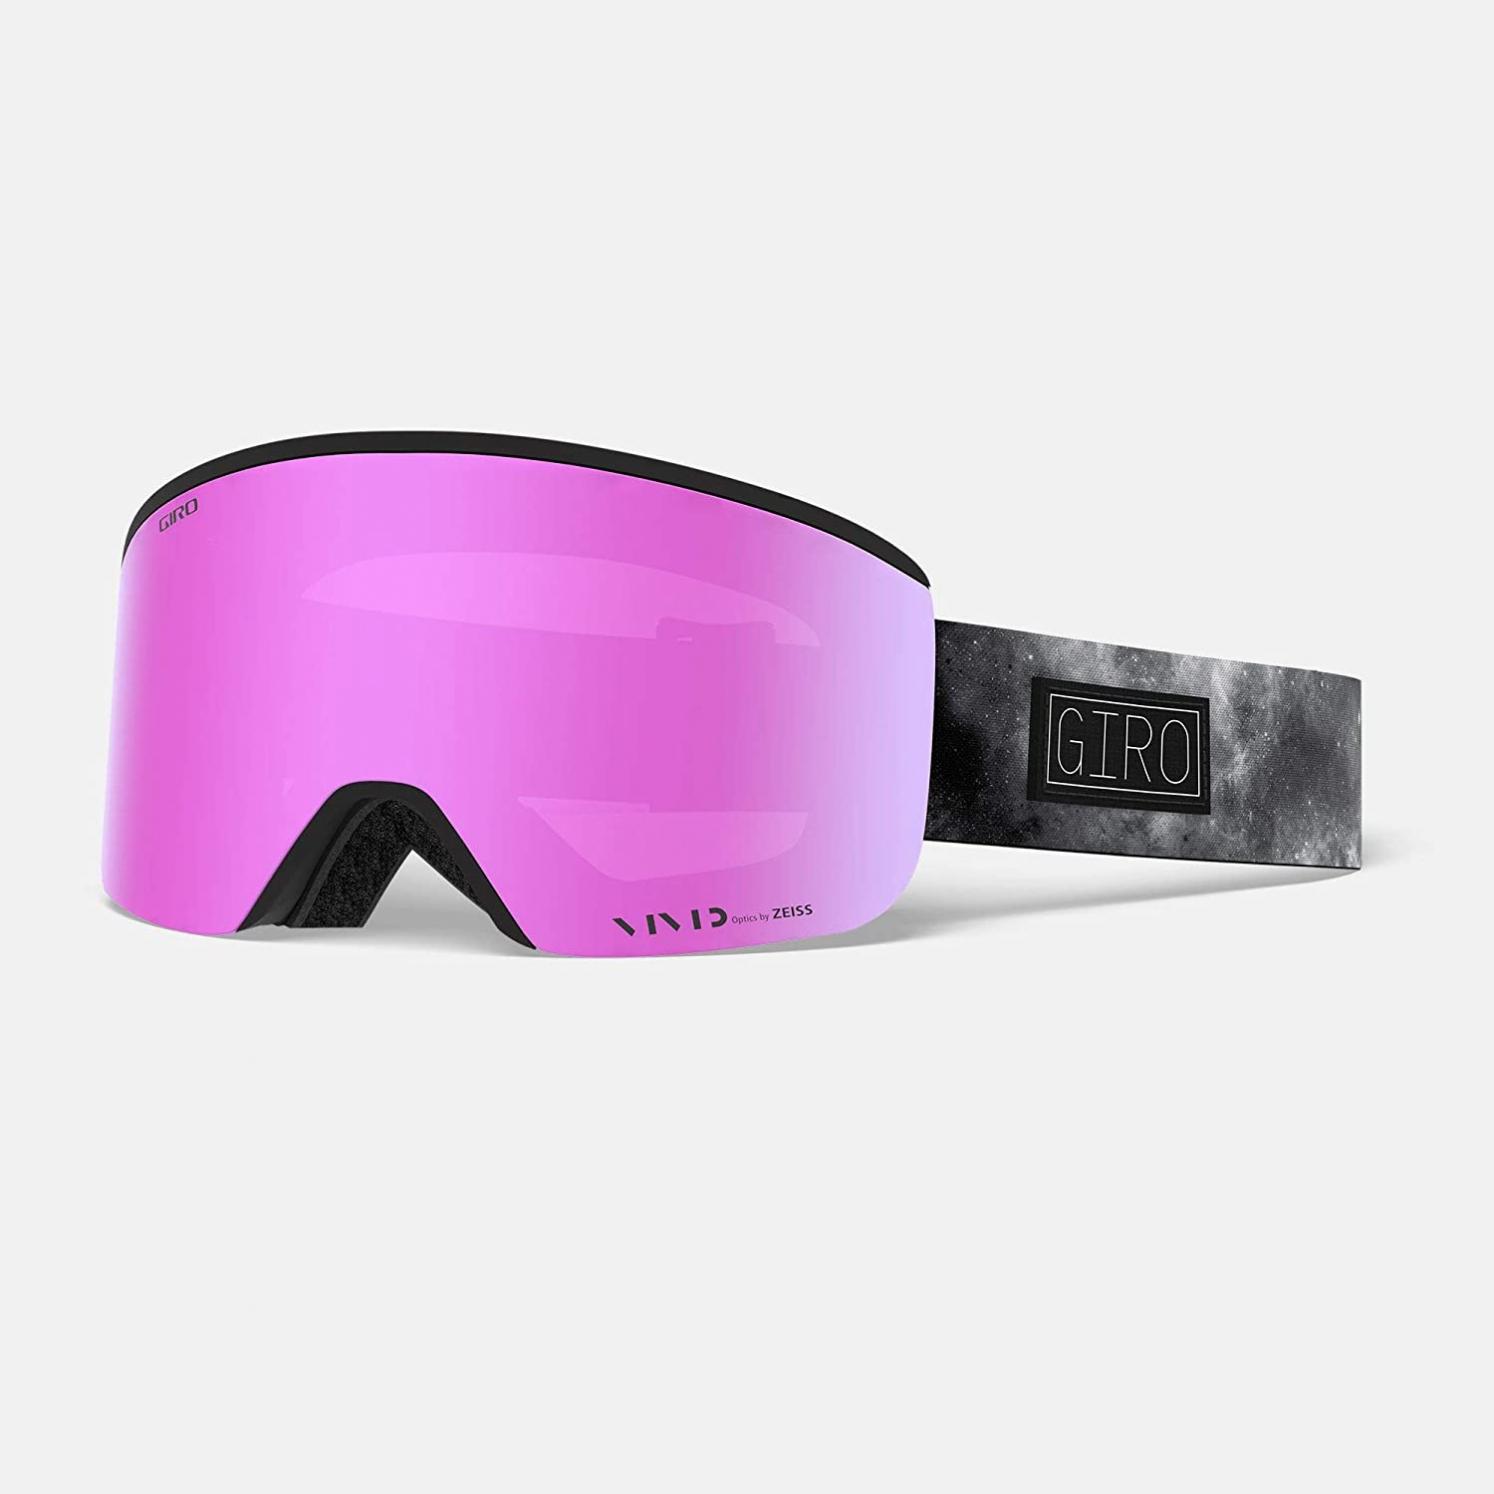 Giro Ella Ski Goggles - Snowboard Goggles for Women - Quick Change with 2 Vivid Lenses - Anti-Fog Vent Tech - OTG